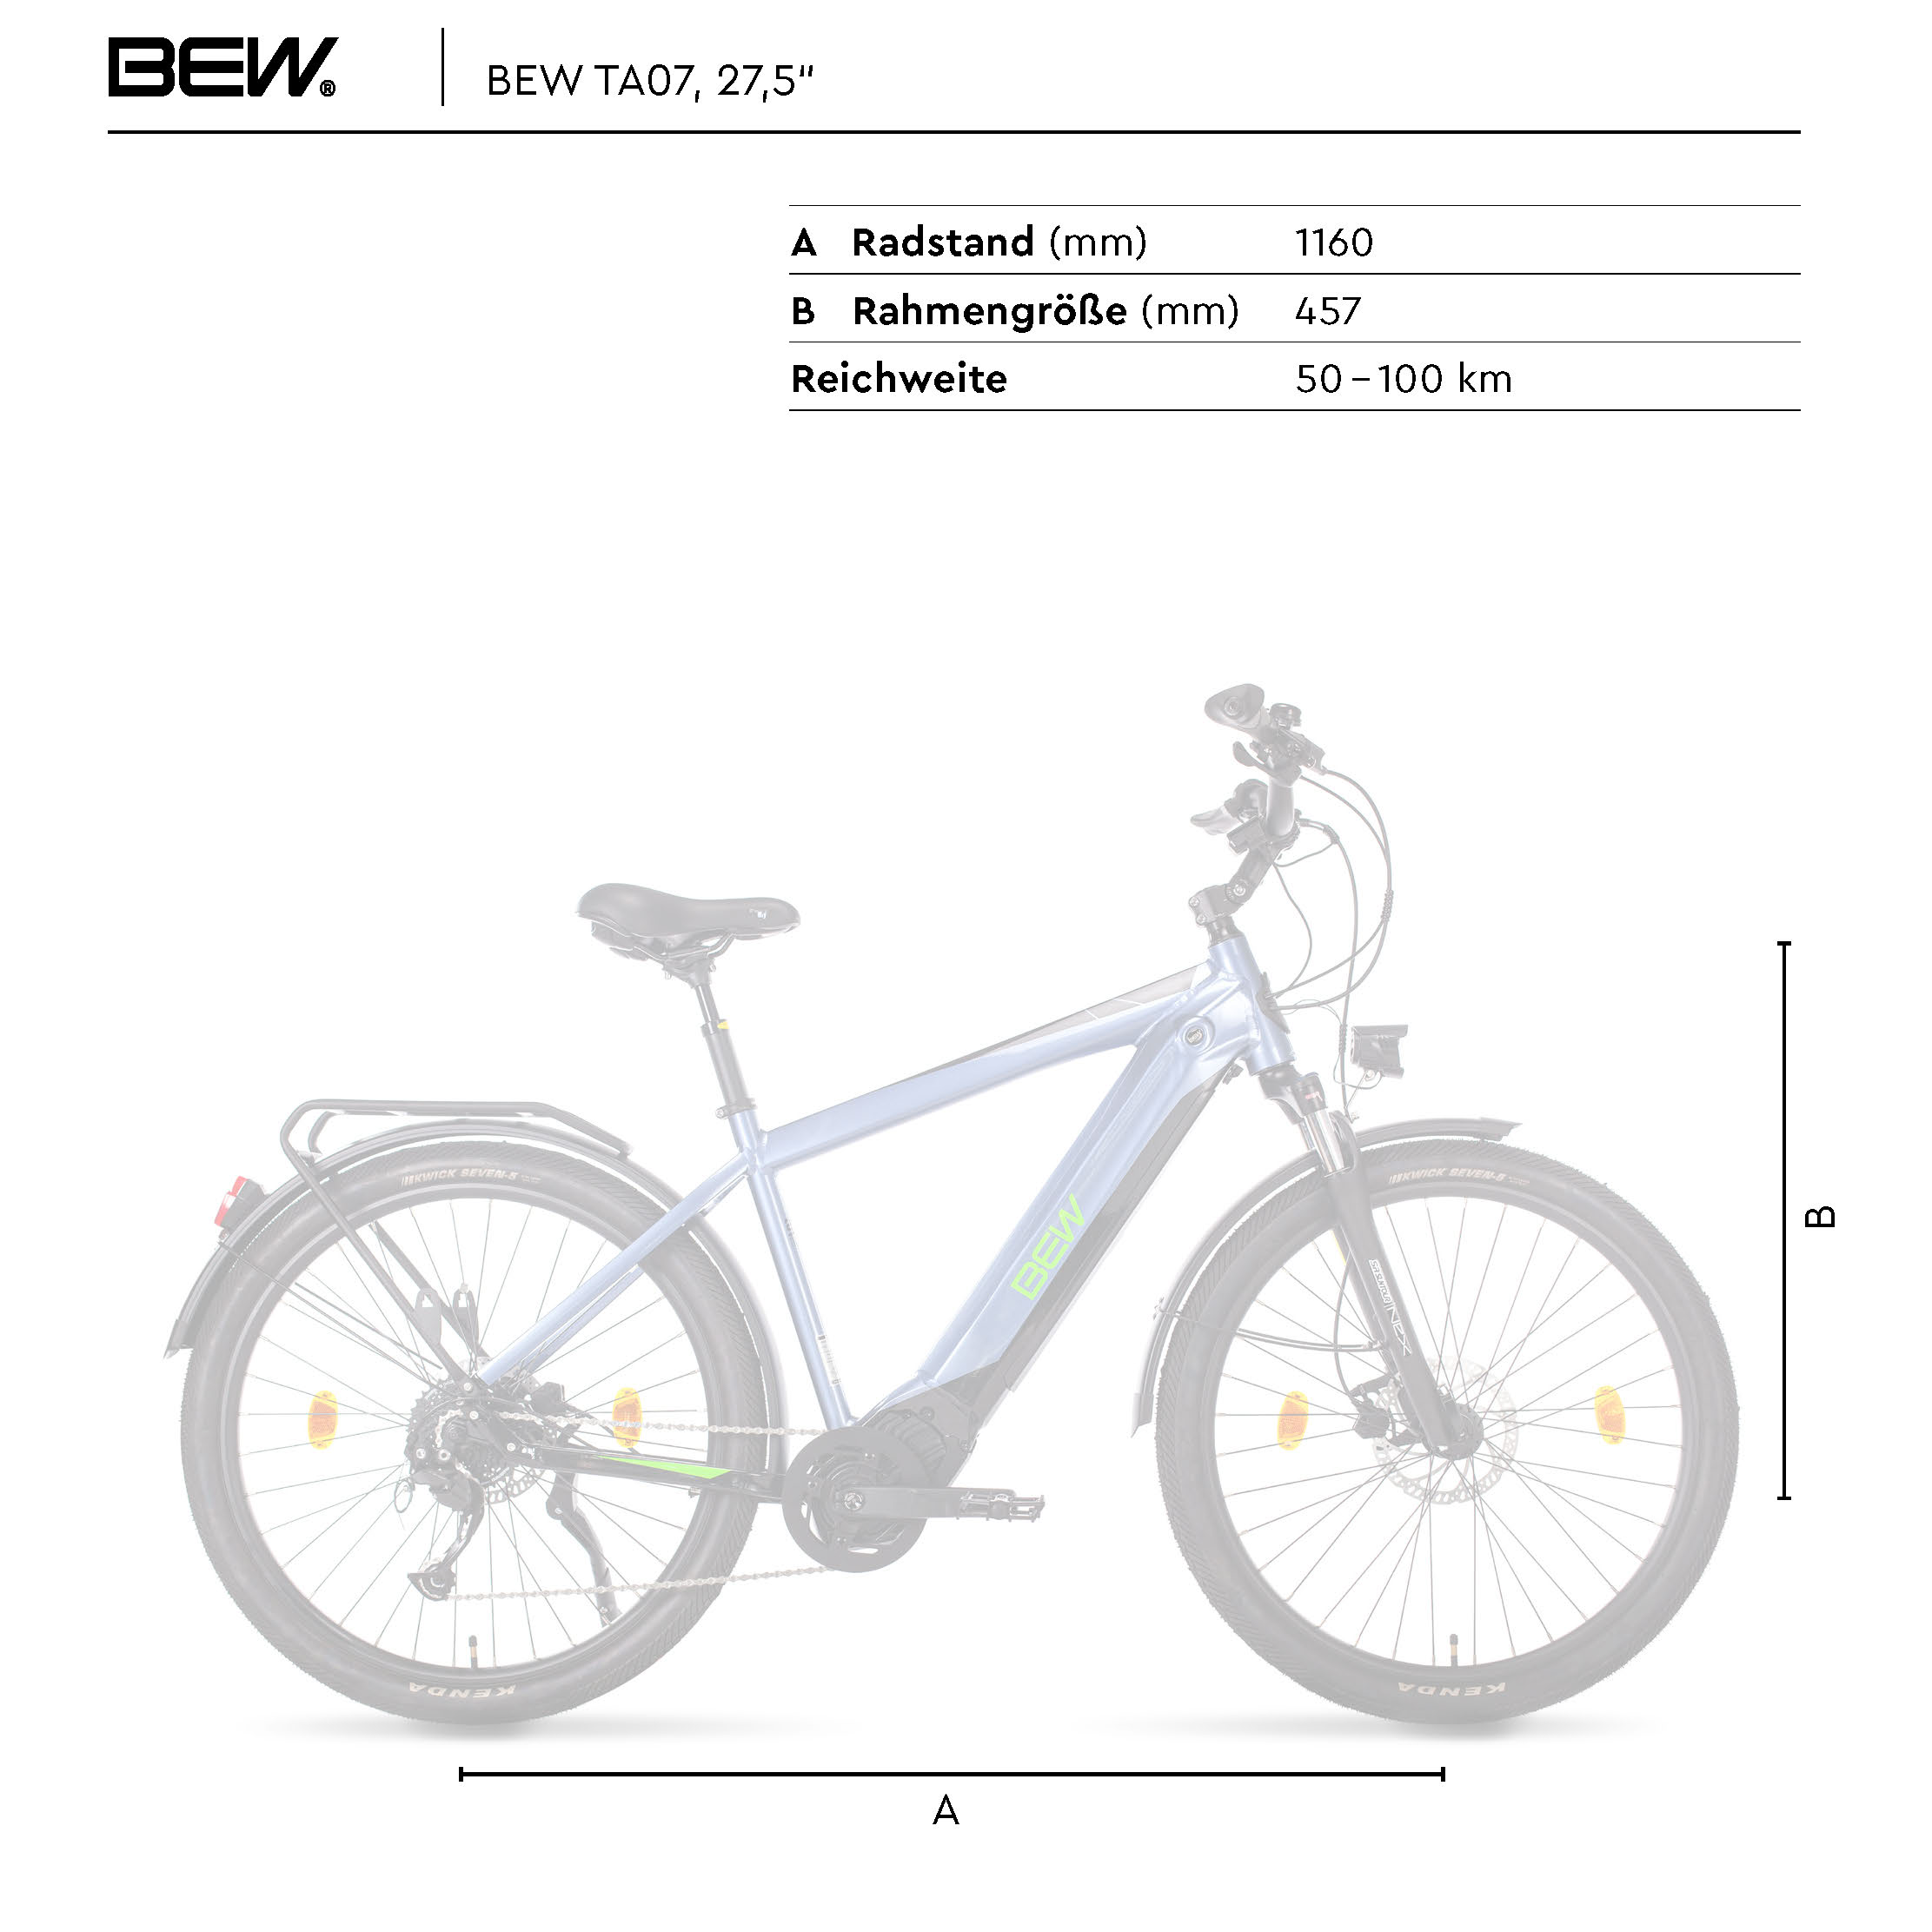 BEW TA07 Trekkingrad (Laufradgröße: 27,5 blau) Herren-Rad, 800 Zoll, Wh